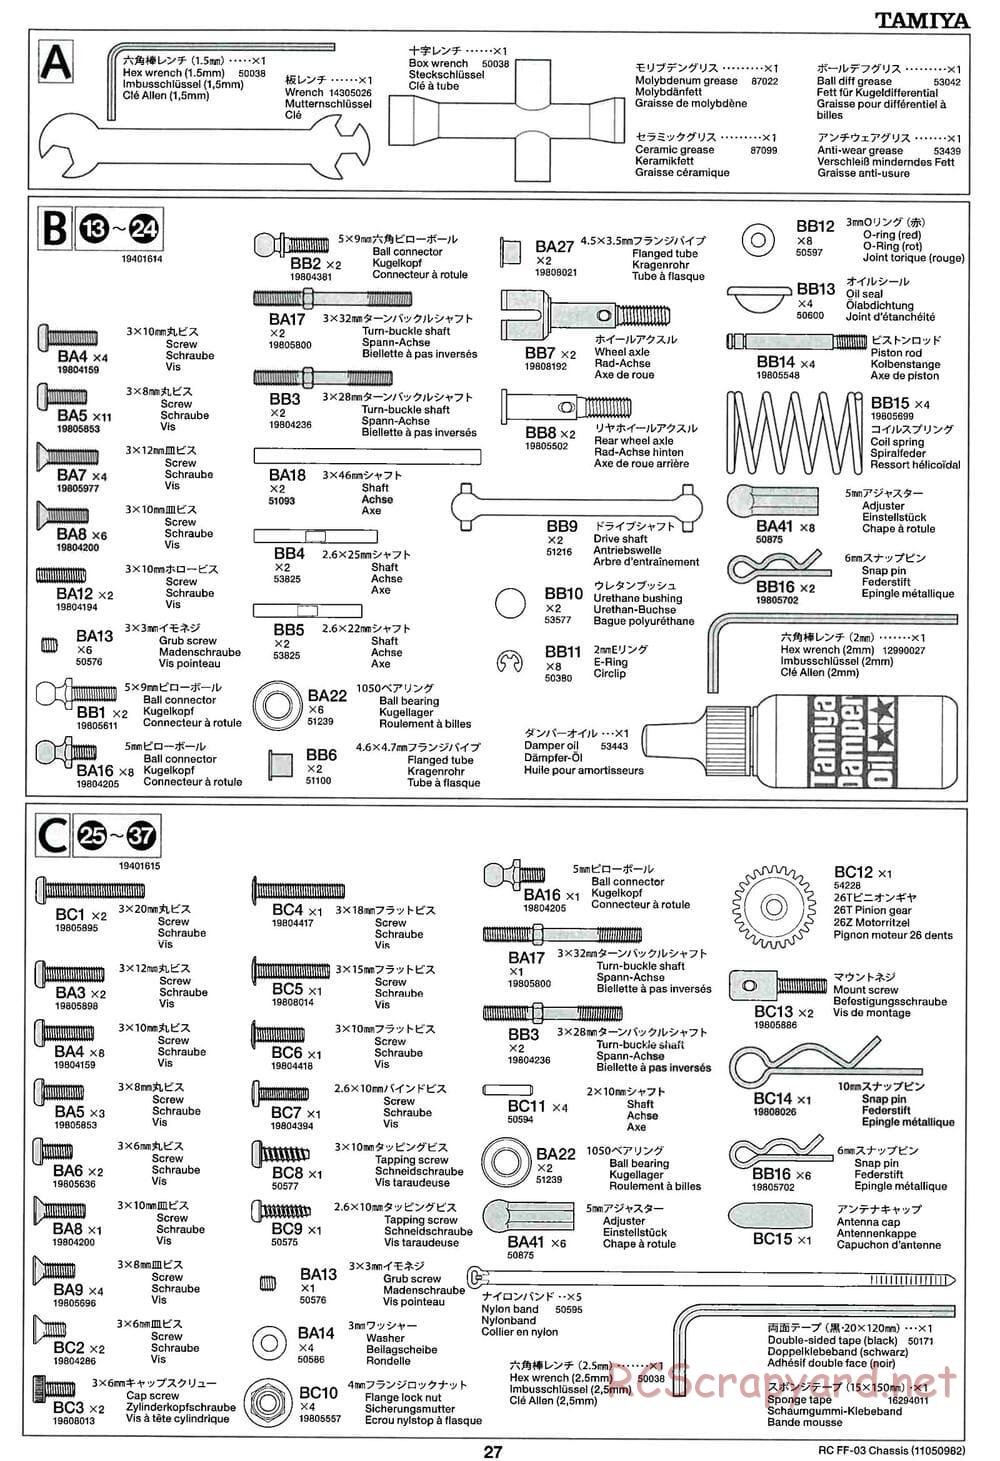 Tamiya - FF-03 Chassis - Manual - Page 27